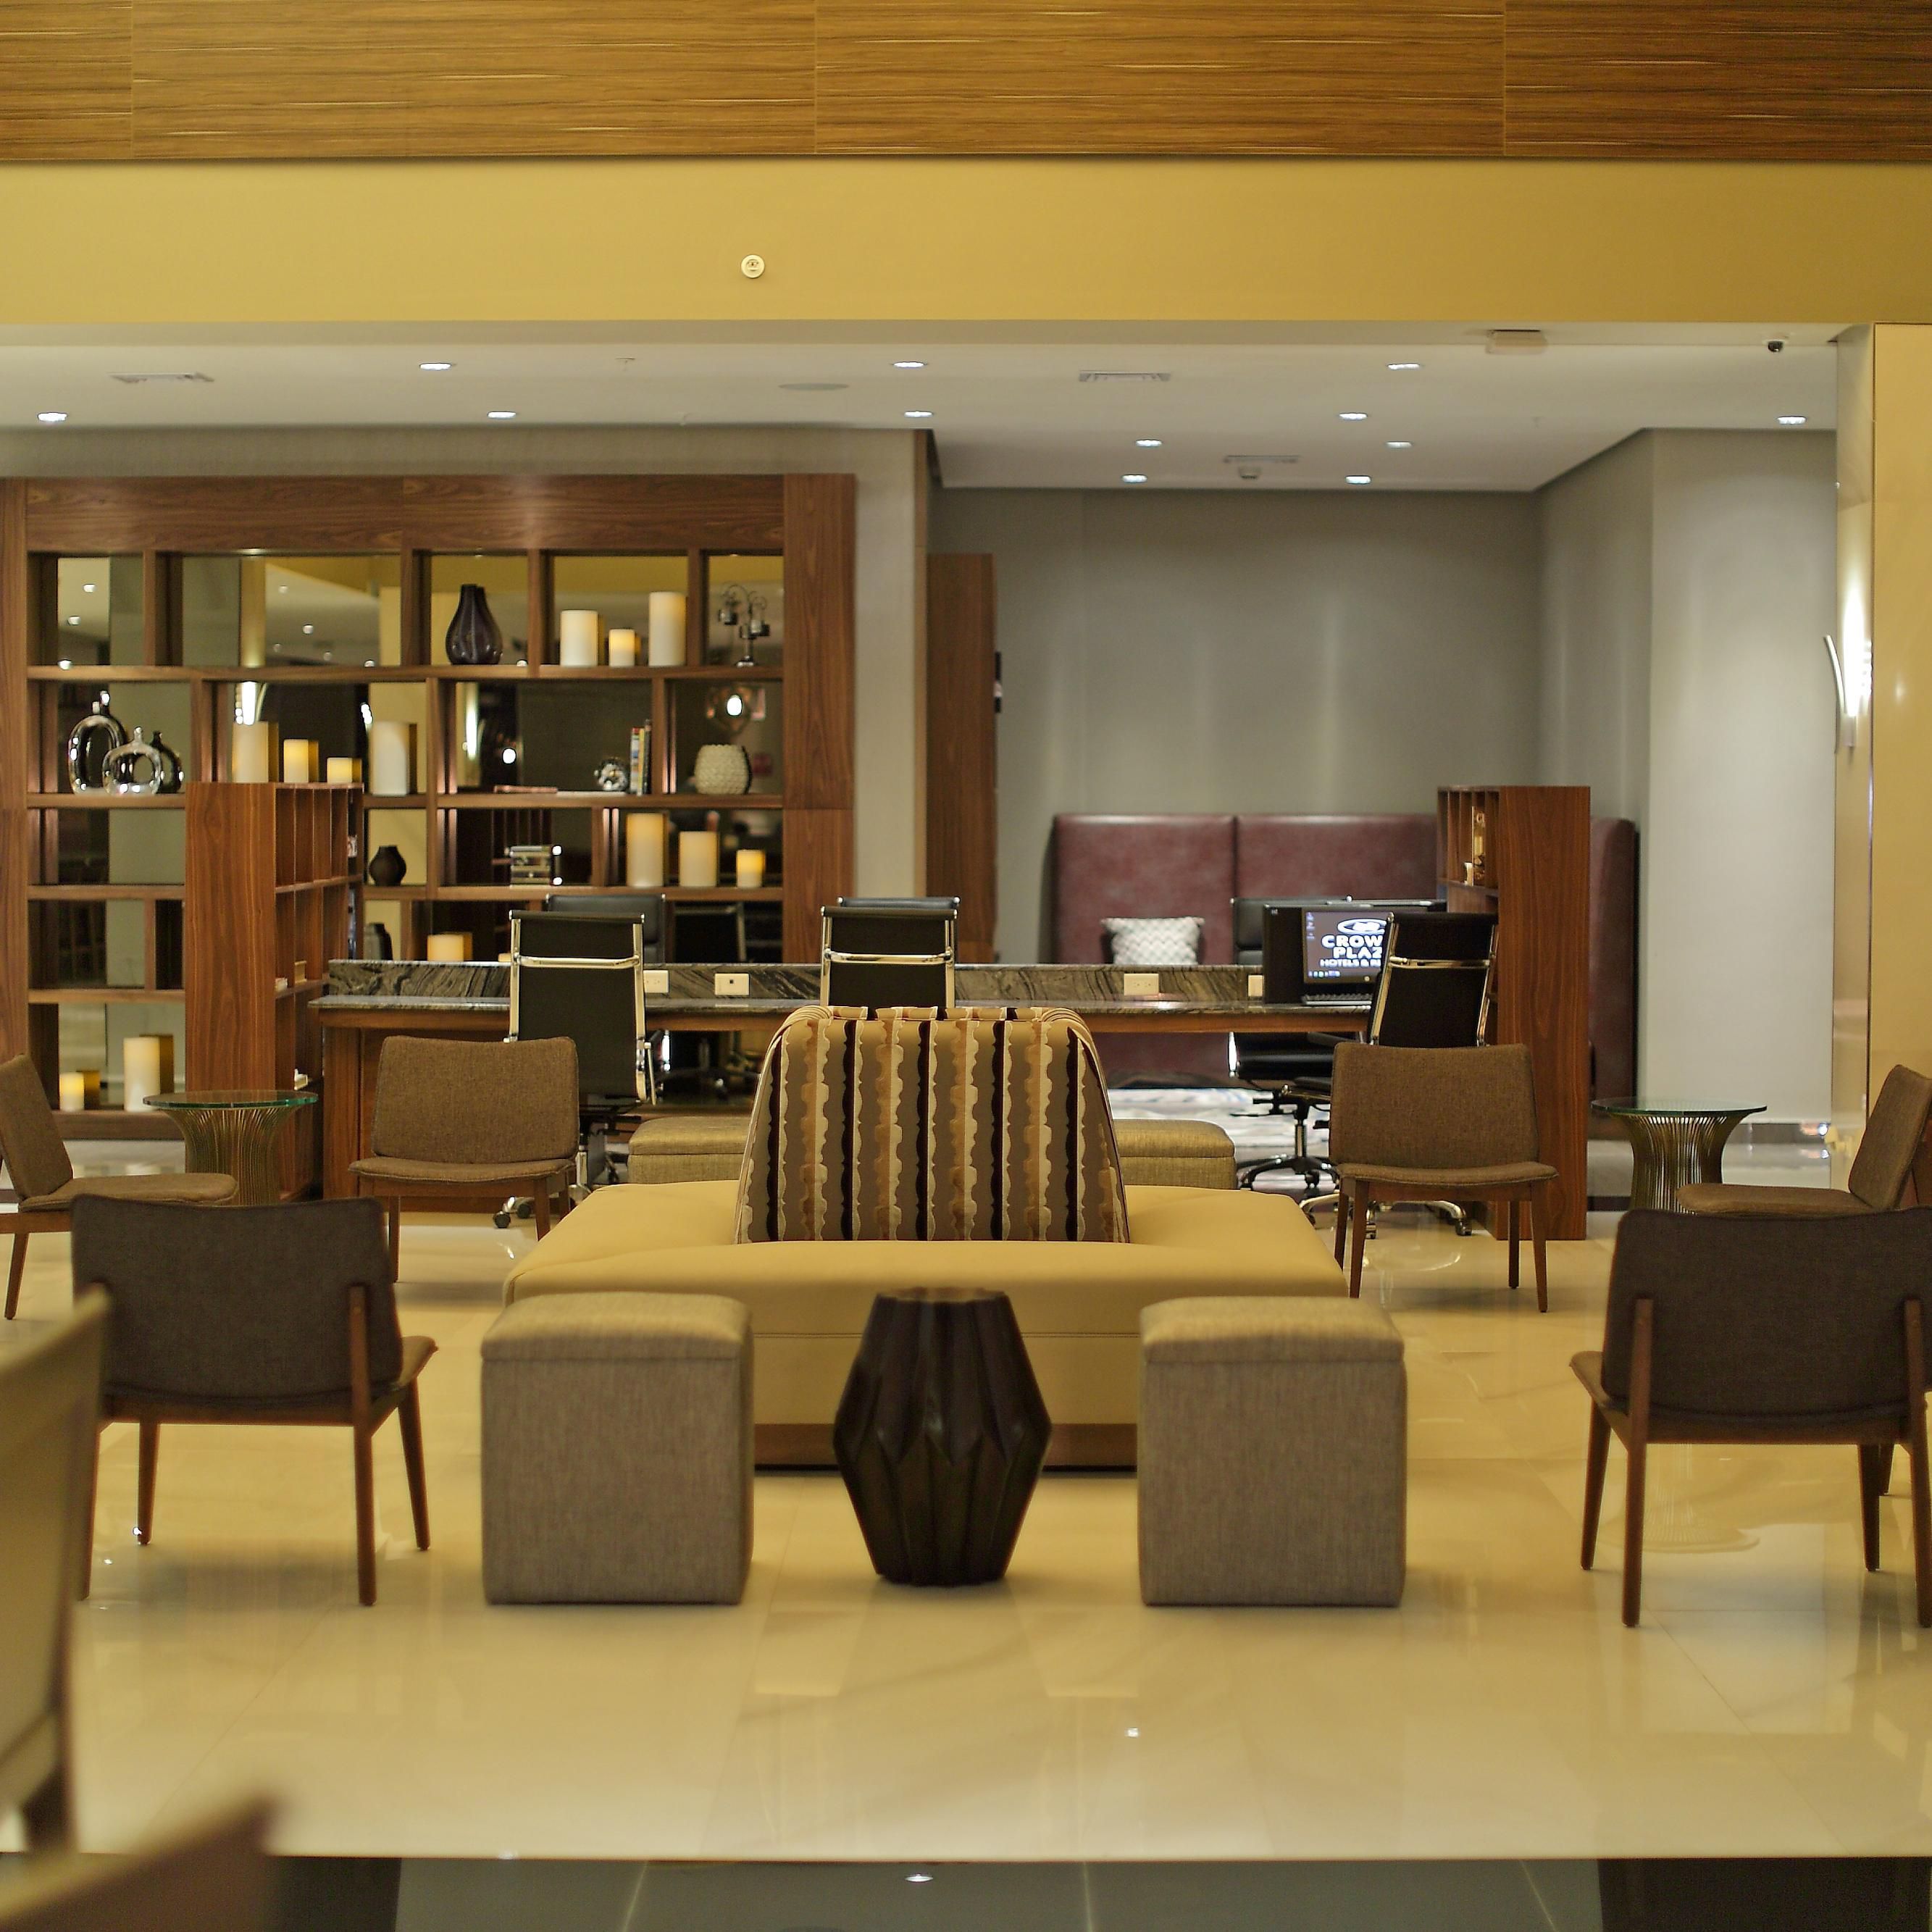 Hotel Lobby of Airport Hotel Panama Crowne Plaza